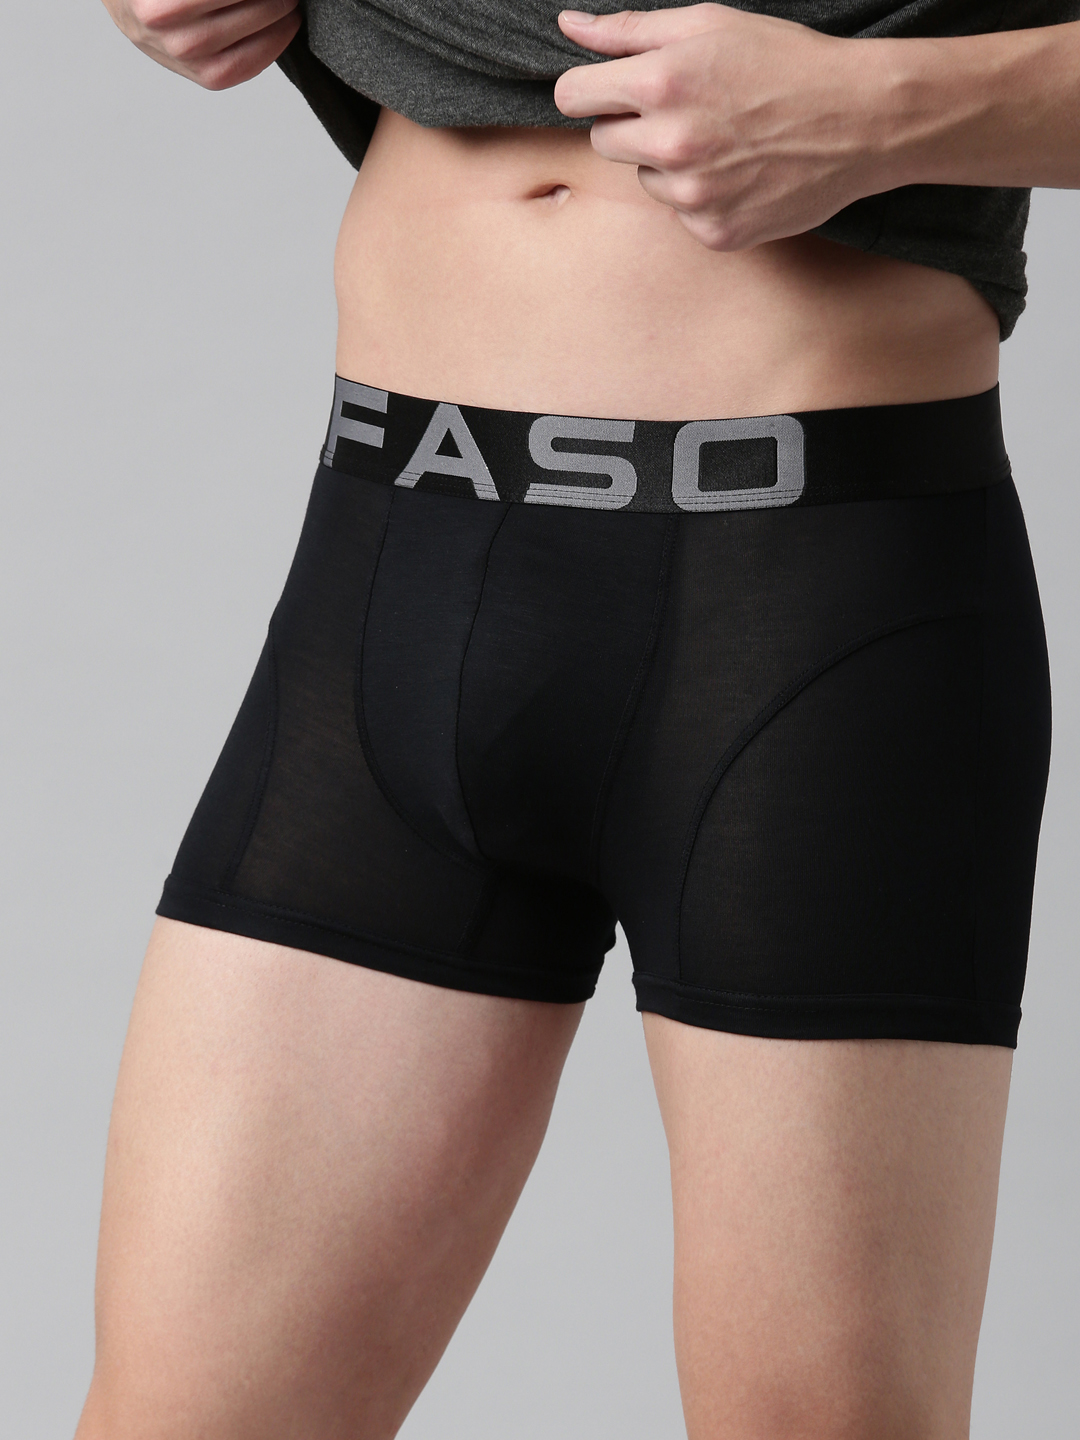 Shop FASO Trunks for mens, Anti bacterial, Organic CottonBuy Premium  Quality Micro Modal Trunk - FA3017